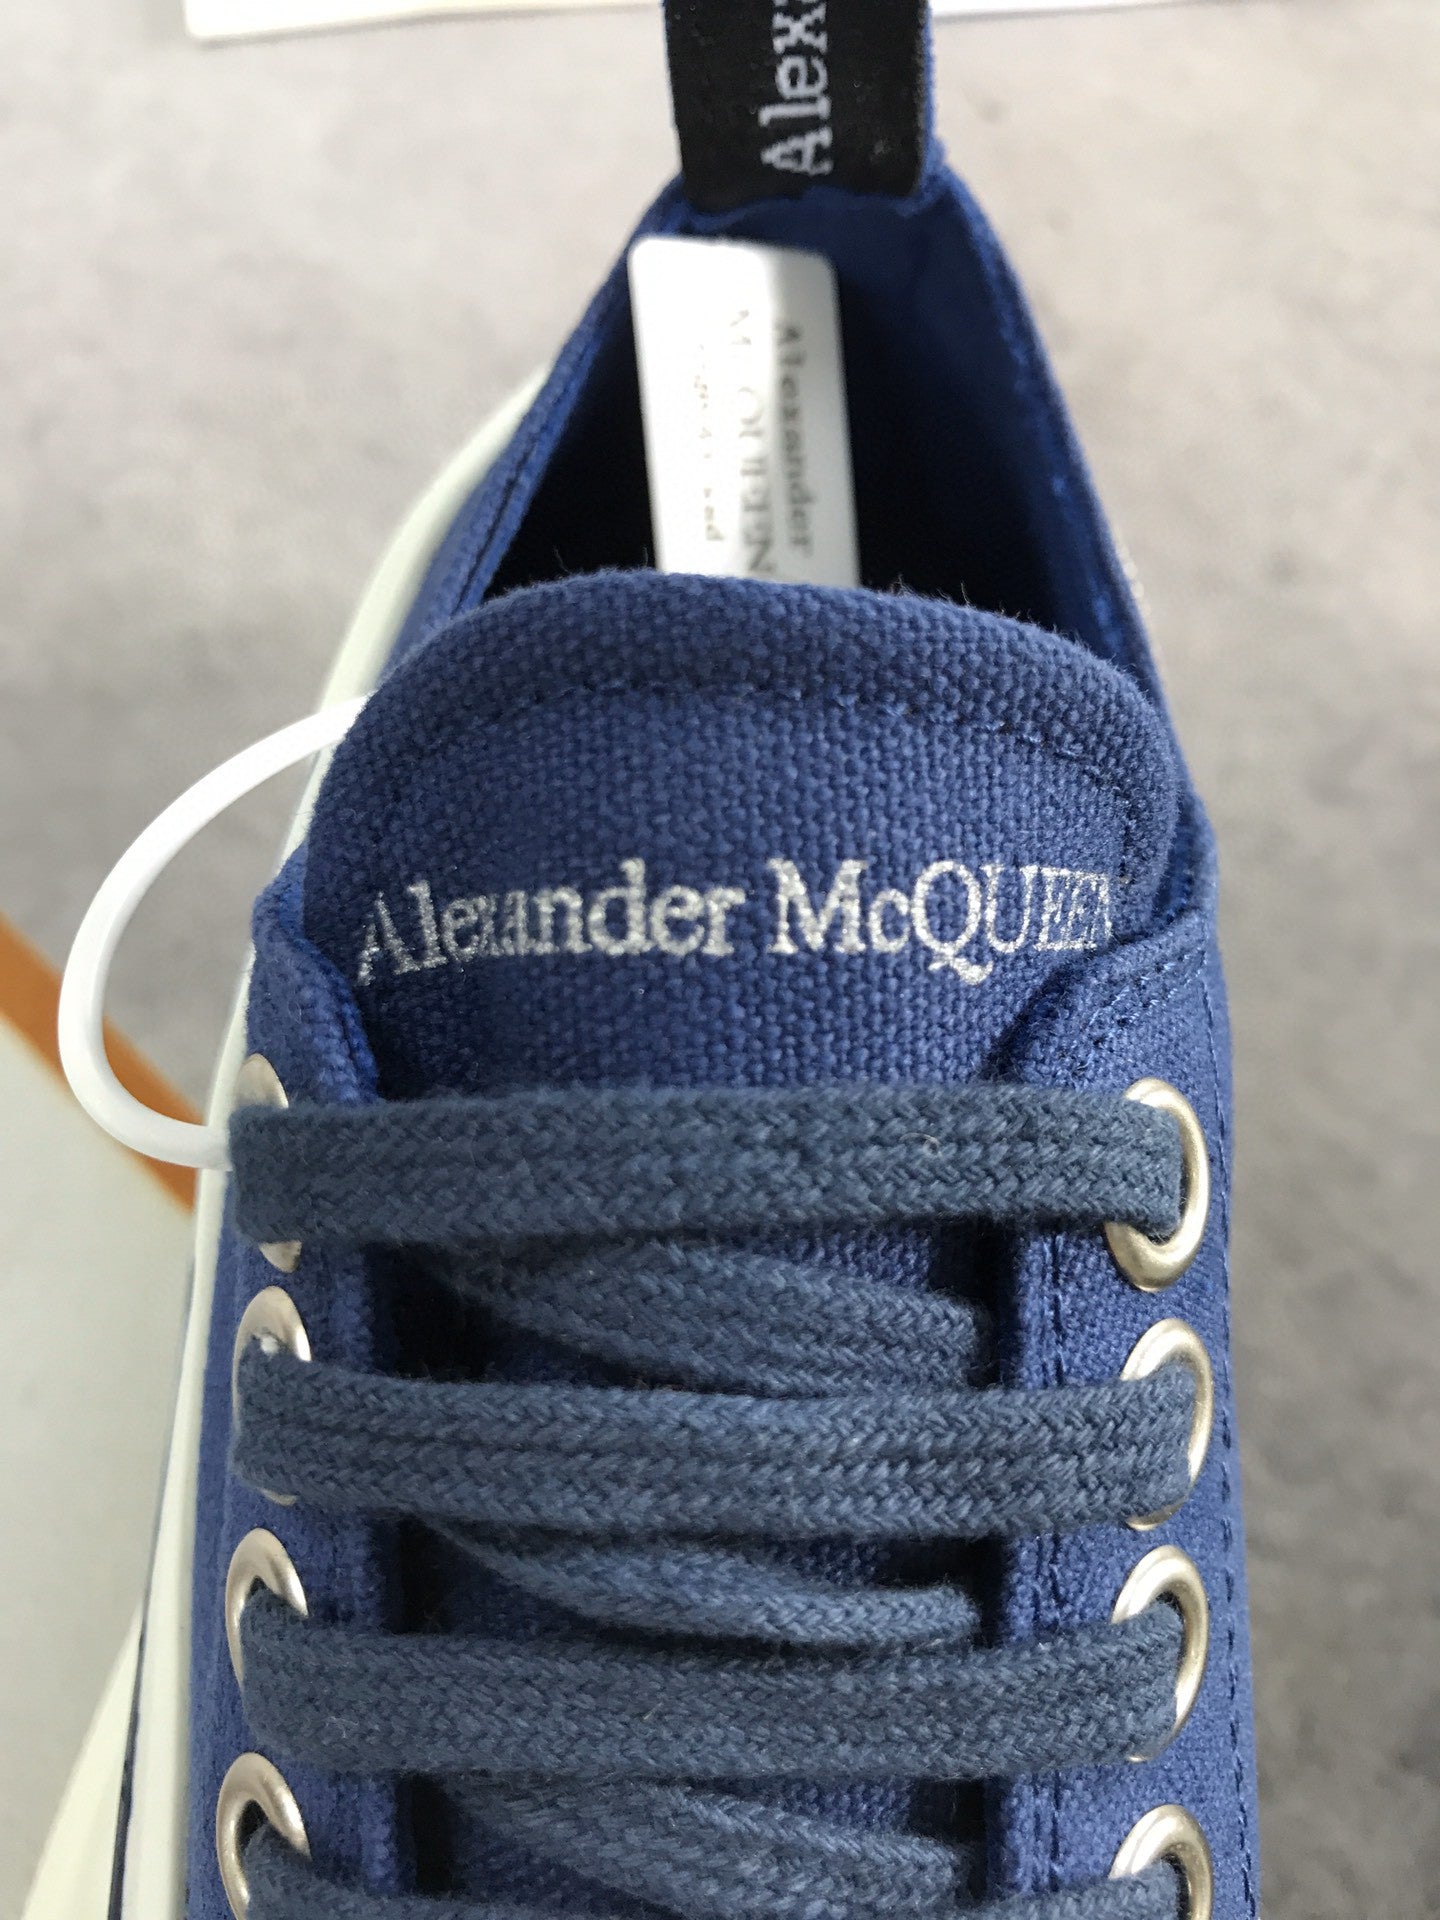 Alexander McQueen Tread Slick Lace Up Cotton Blue For Men